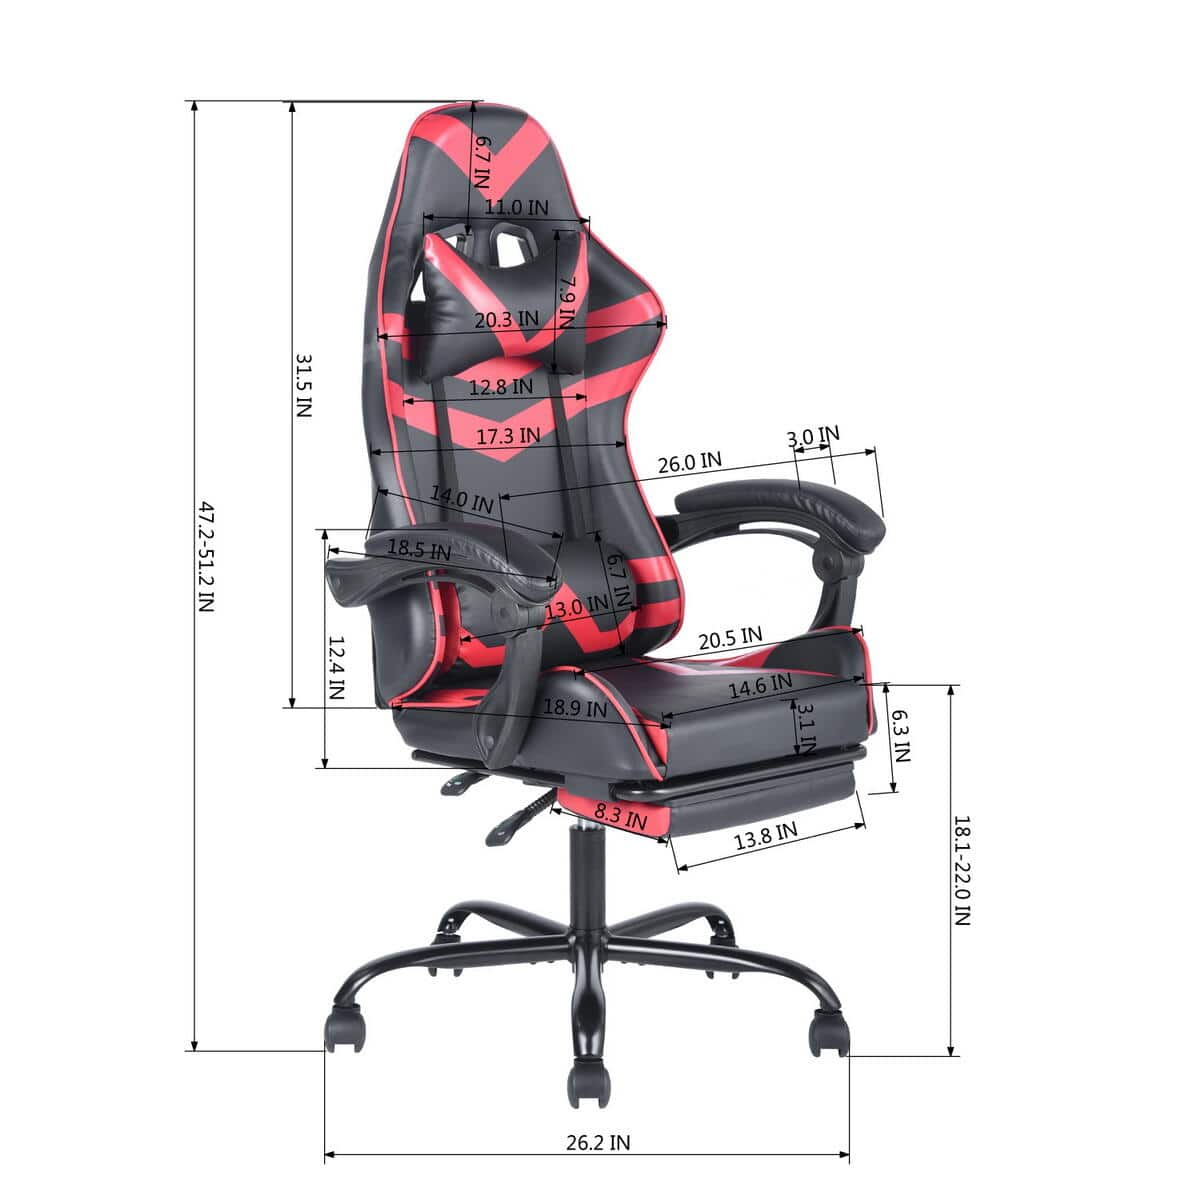 Attic Black Red Ergonomic Video Gaming Chair